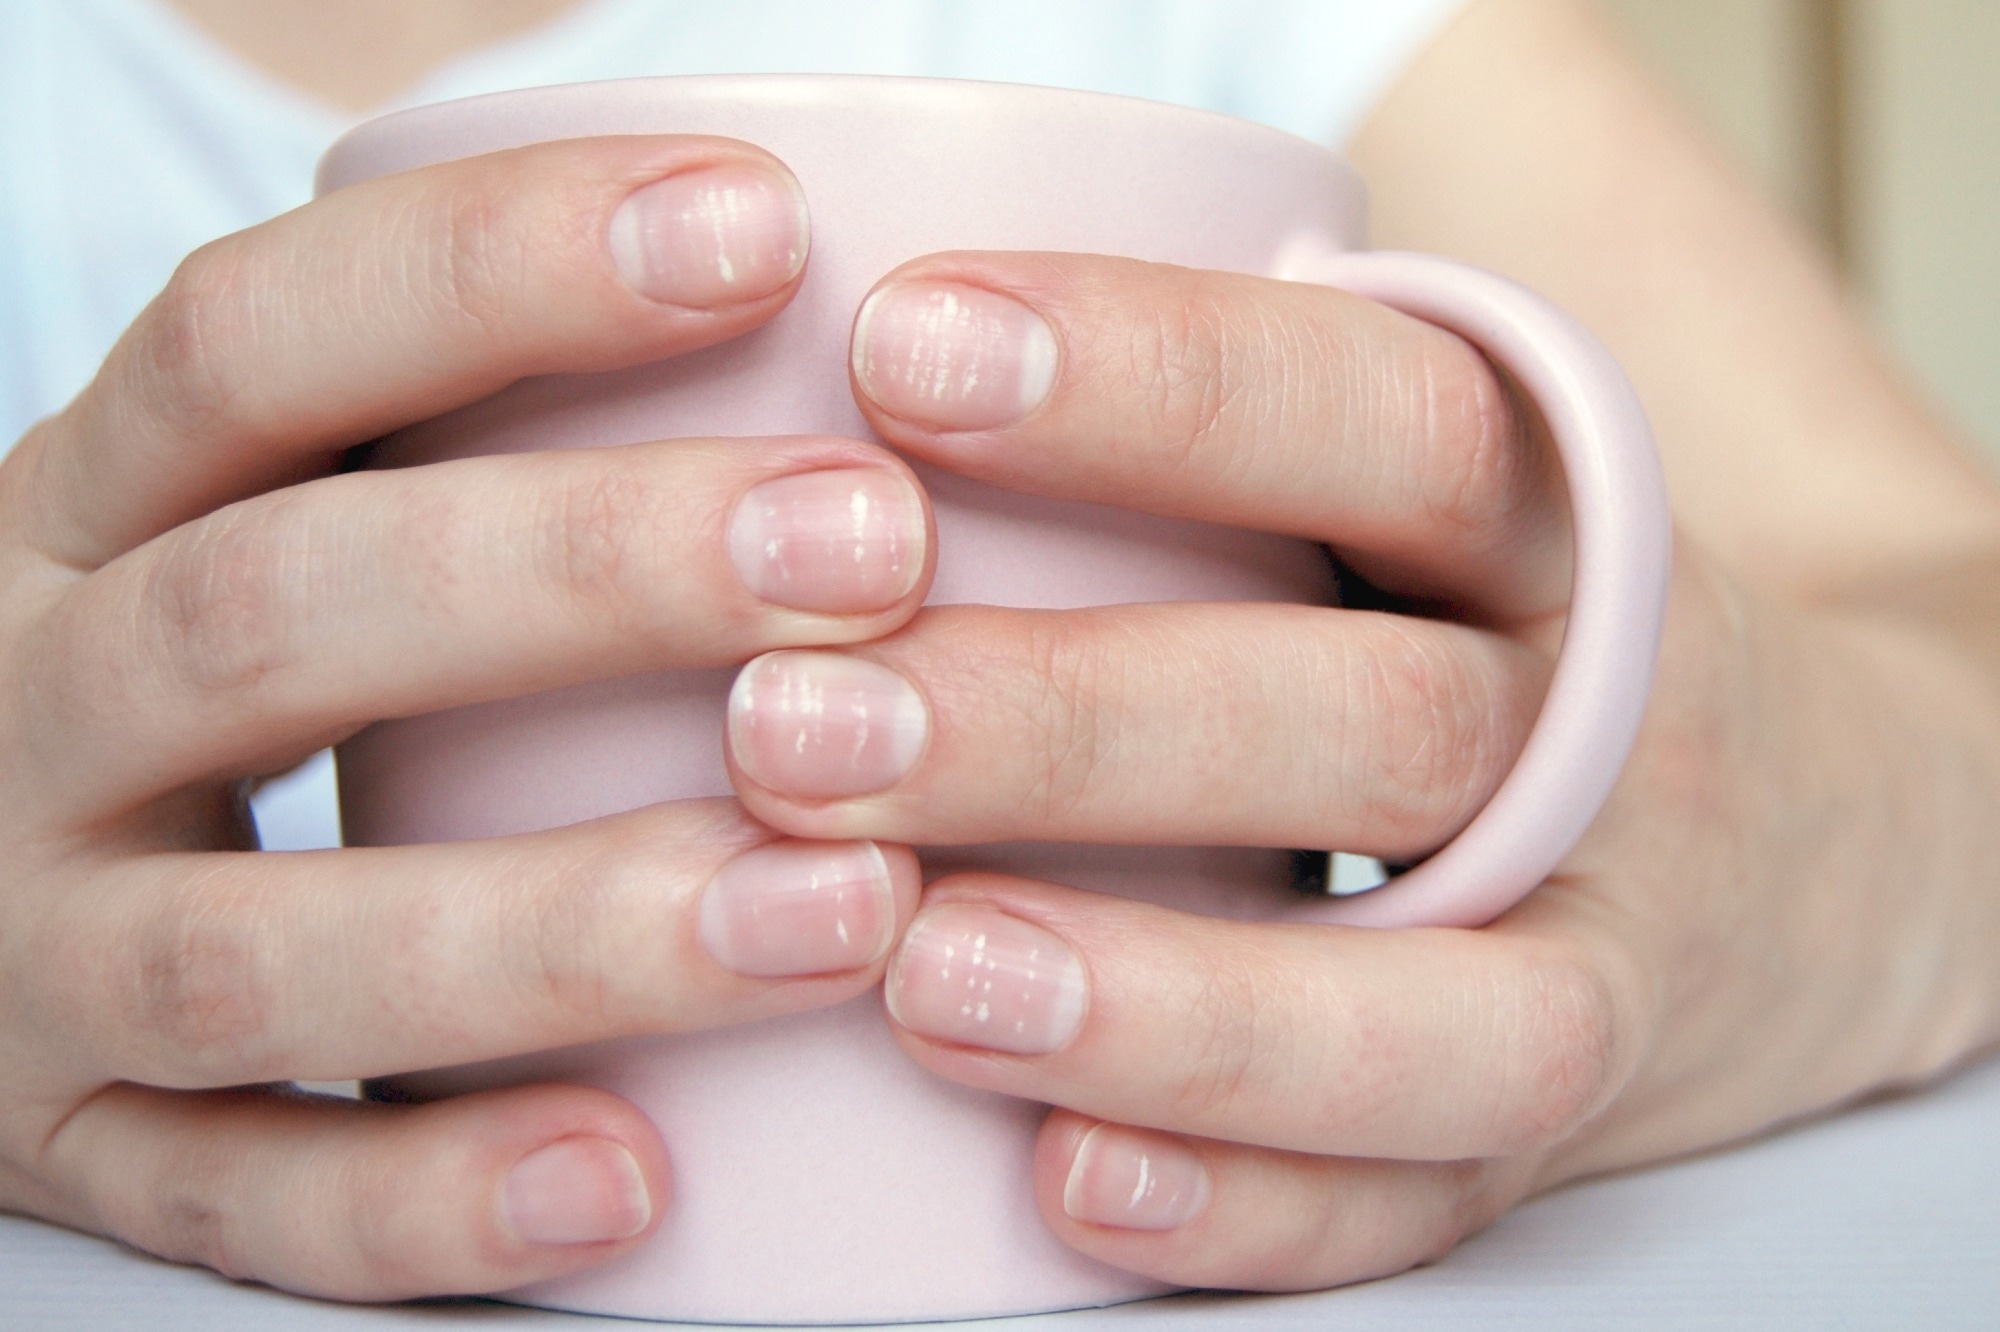 White spots on fingernails (Leukonychia). Image Credit: Nadya So / Shutterstock